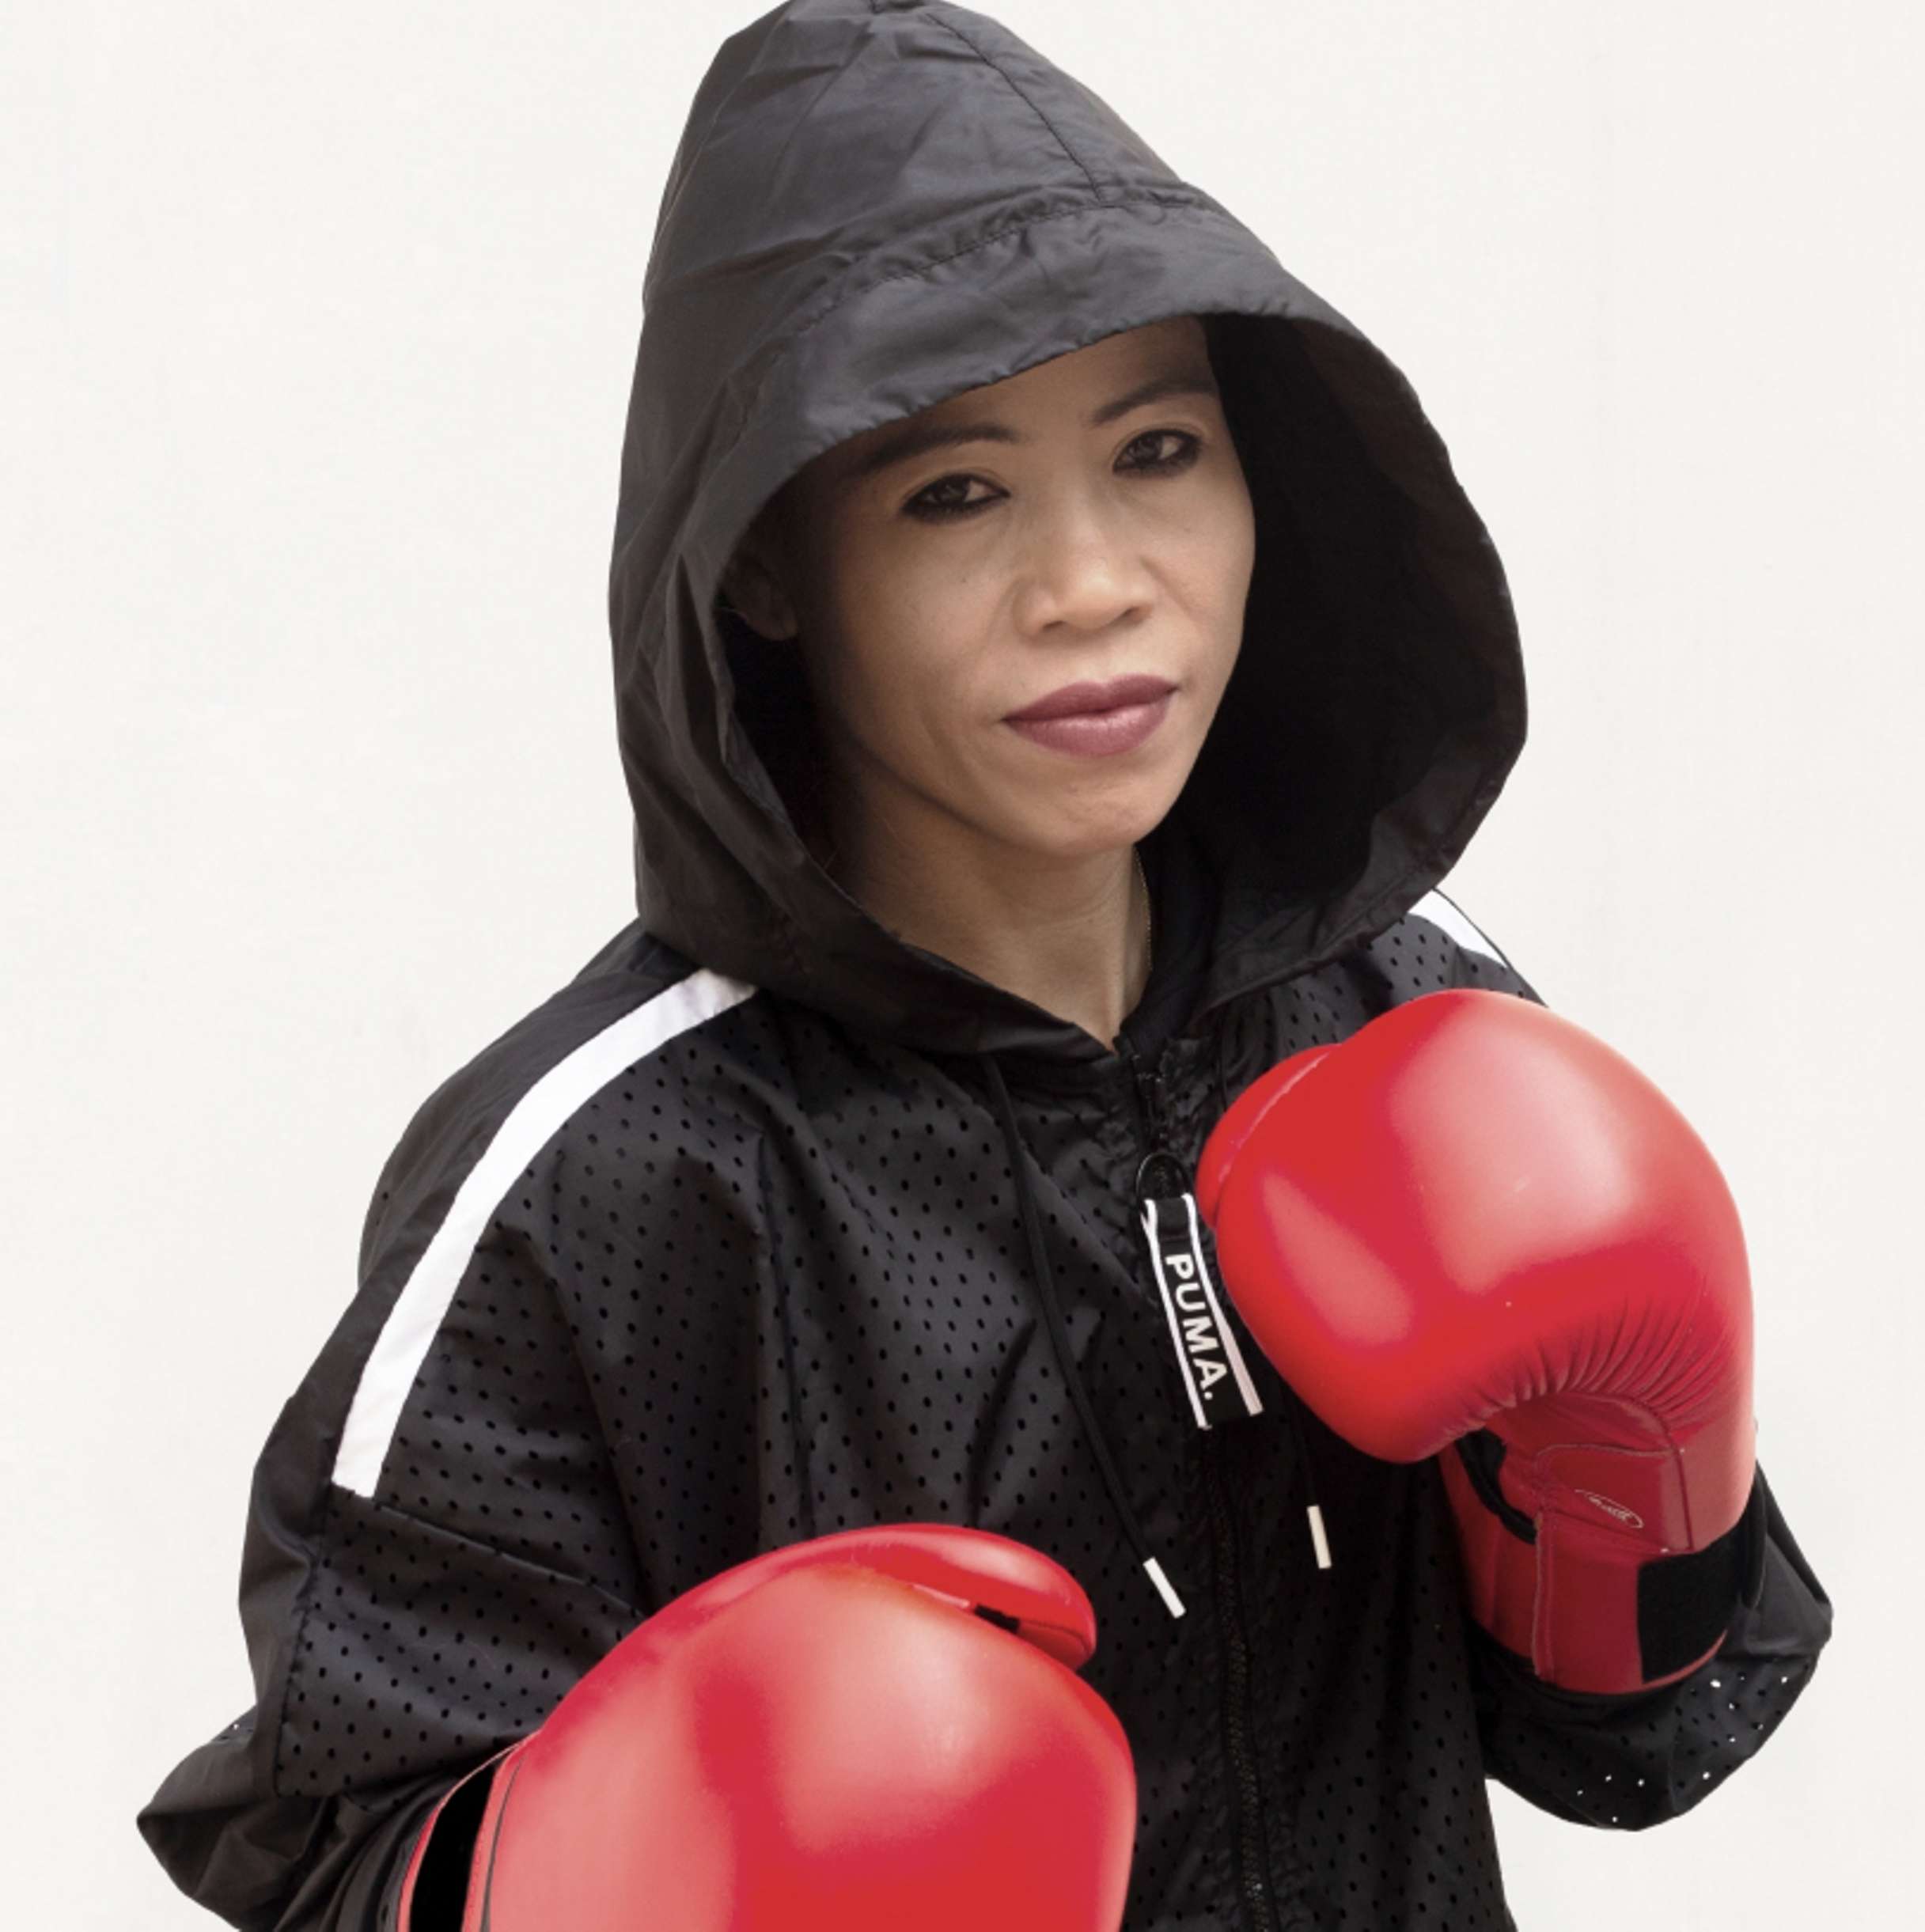 Puma appoints boxing champion Mary Kom 